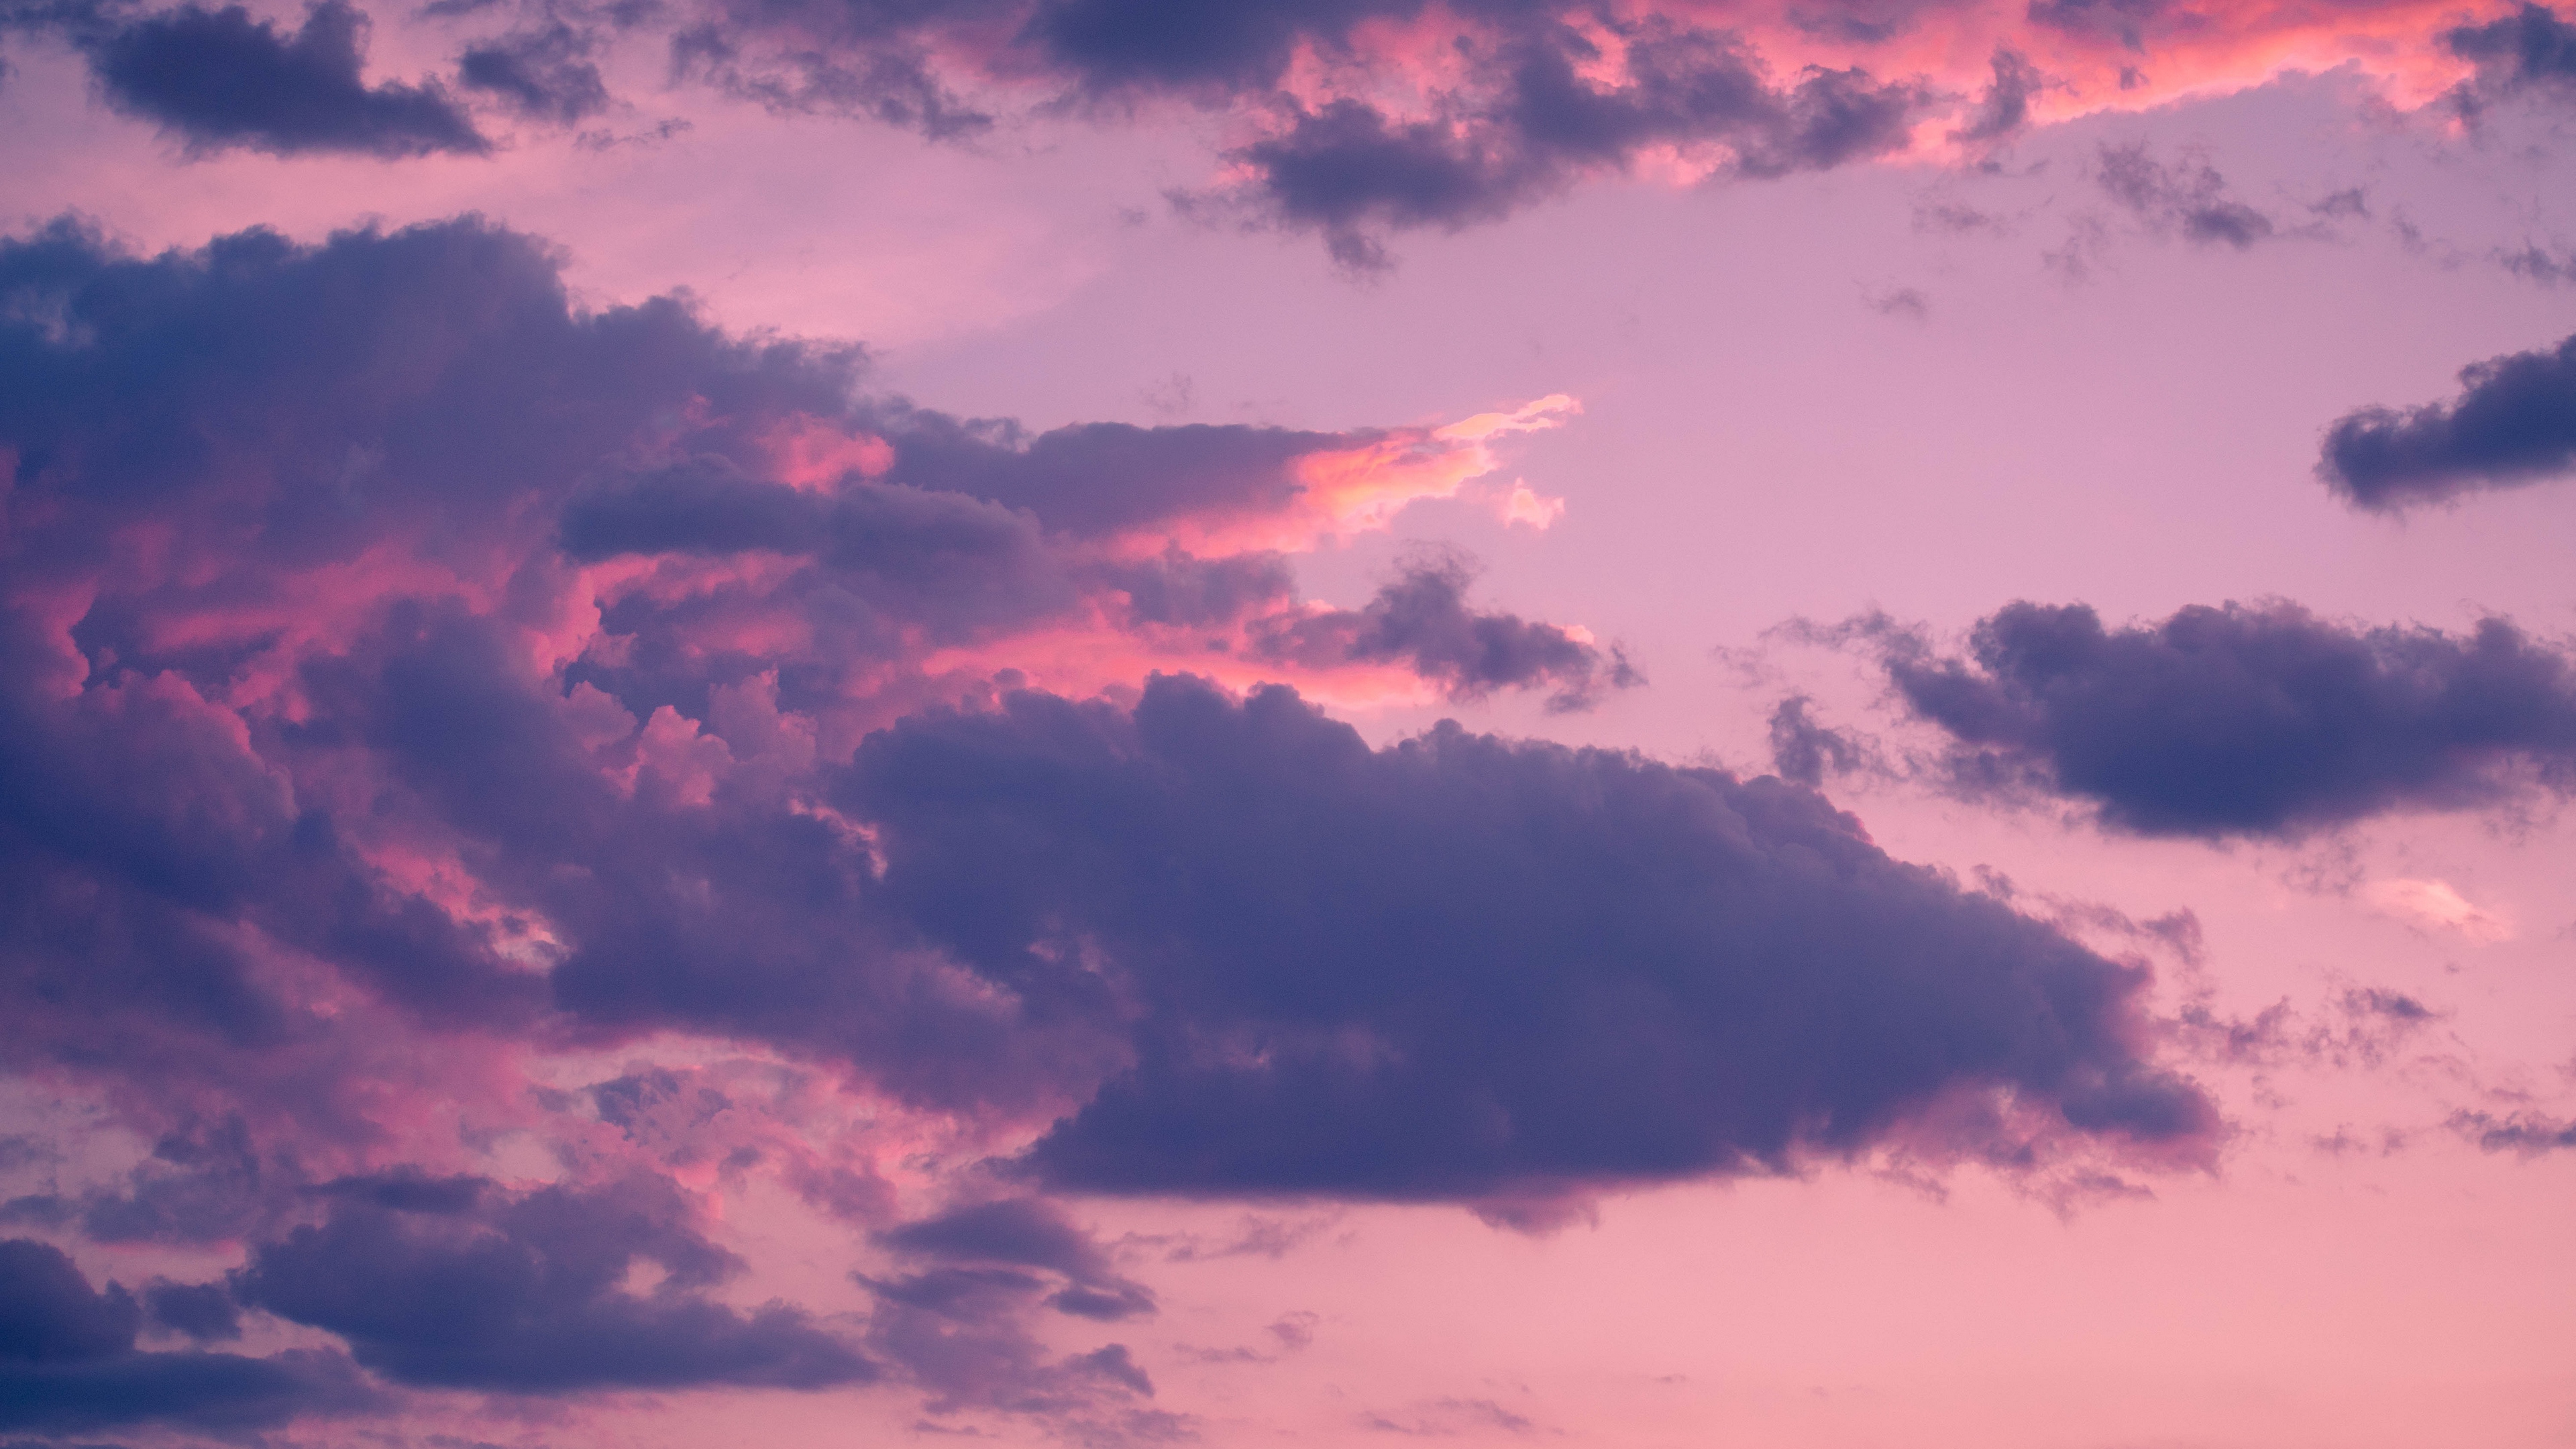 Wallpaper Clouds Porous Sky Sunset Pink Sky Background Hd 3840x2160 Wallpaper Teahub Io